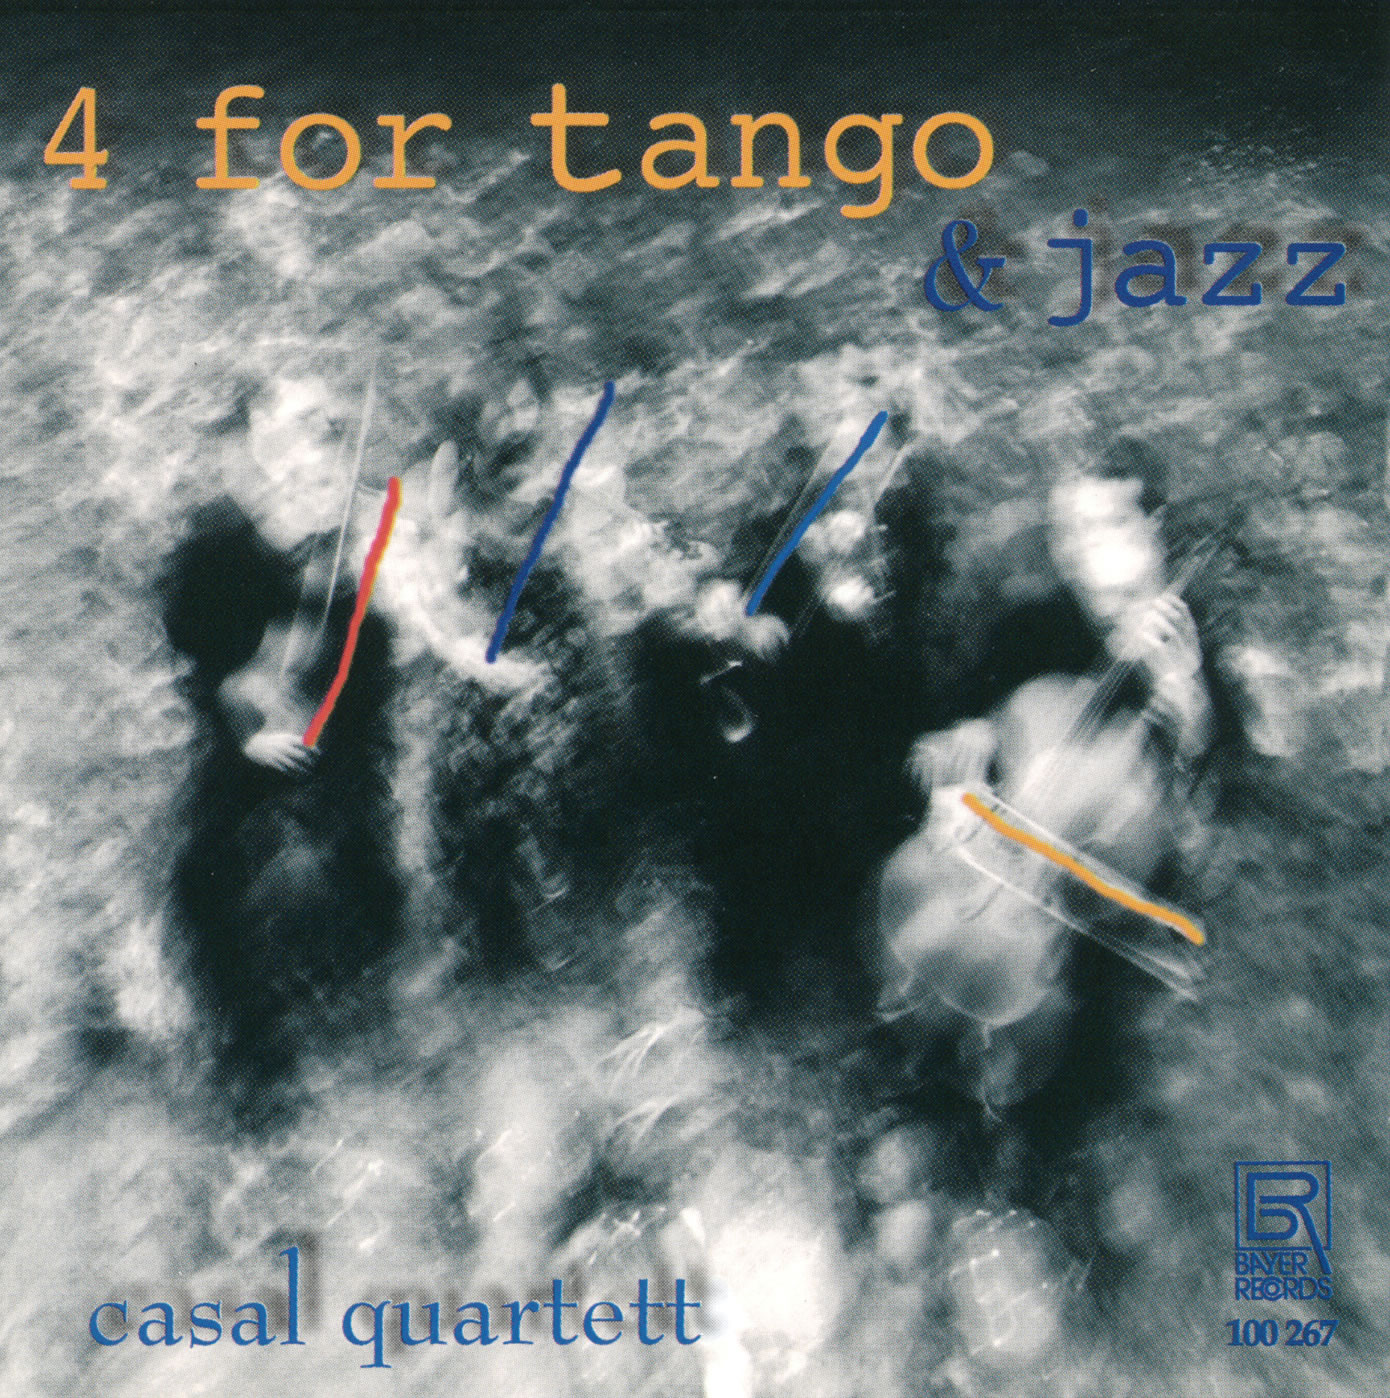 4 for tango